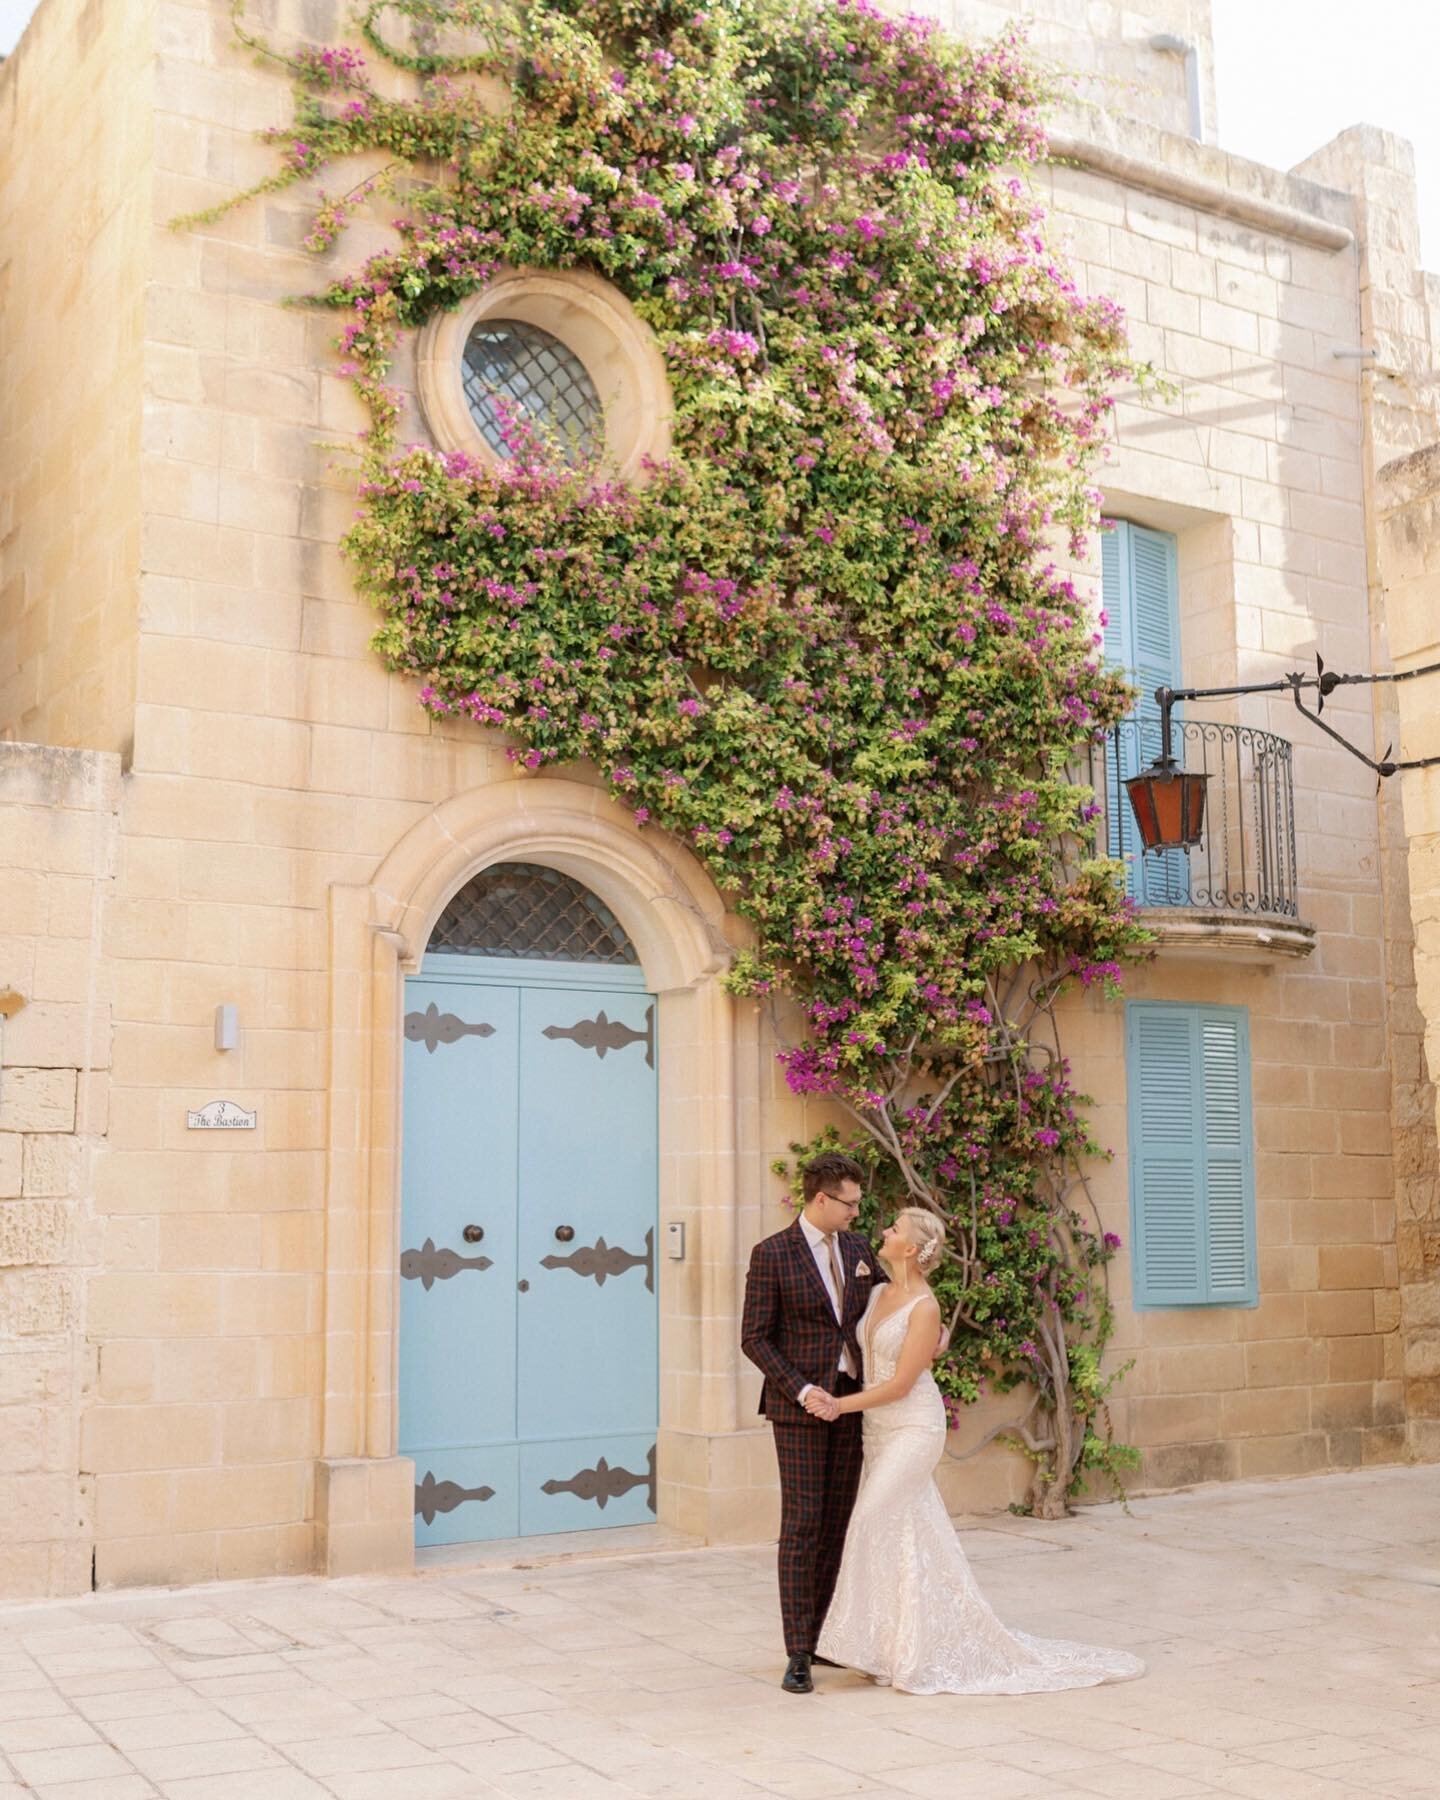 Malta with Z &amp; A ☀️
.
.
#sukniaslubna #weddingdress #slub2021 #fineartweddingphotography #fineartweddingphotographer #fineartbride #fotografslubny #fotografslubnygdansk #fotografslubnytrojmiasto #gdanskfotograf #fotografgdansk #fotograftrojmiasto